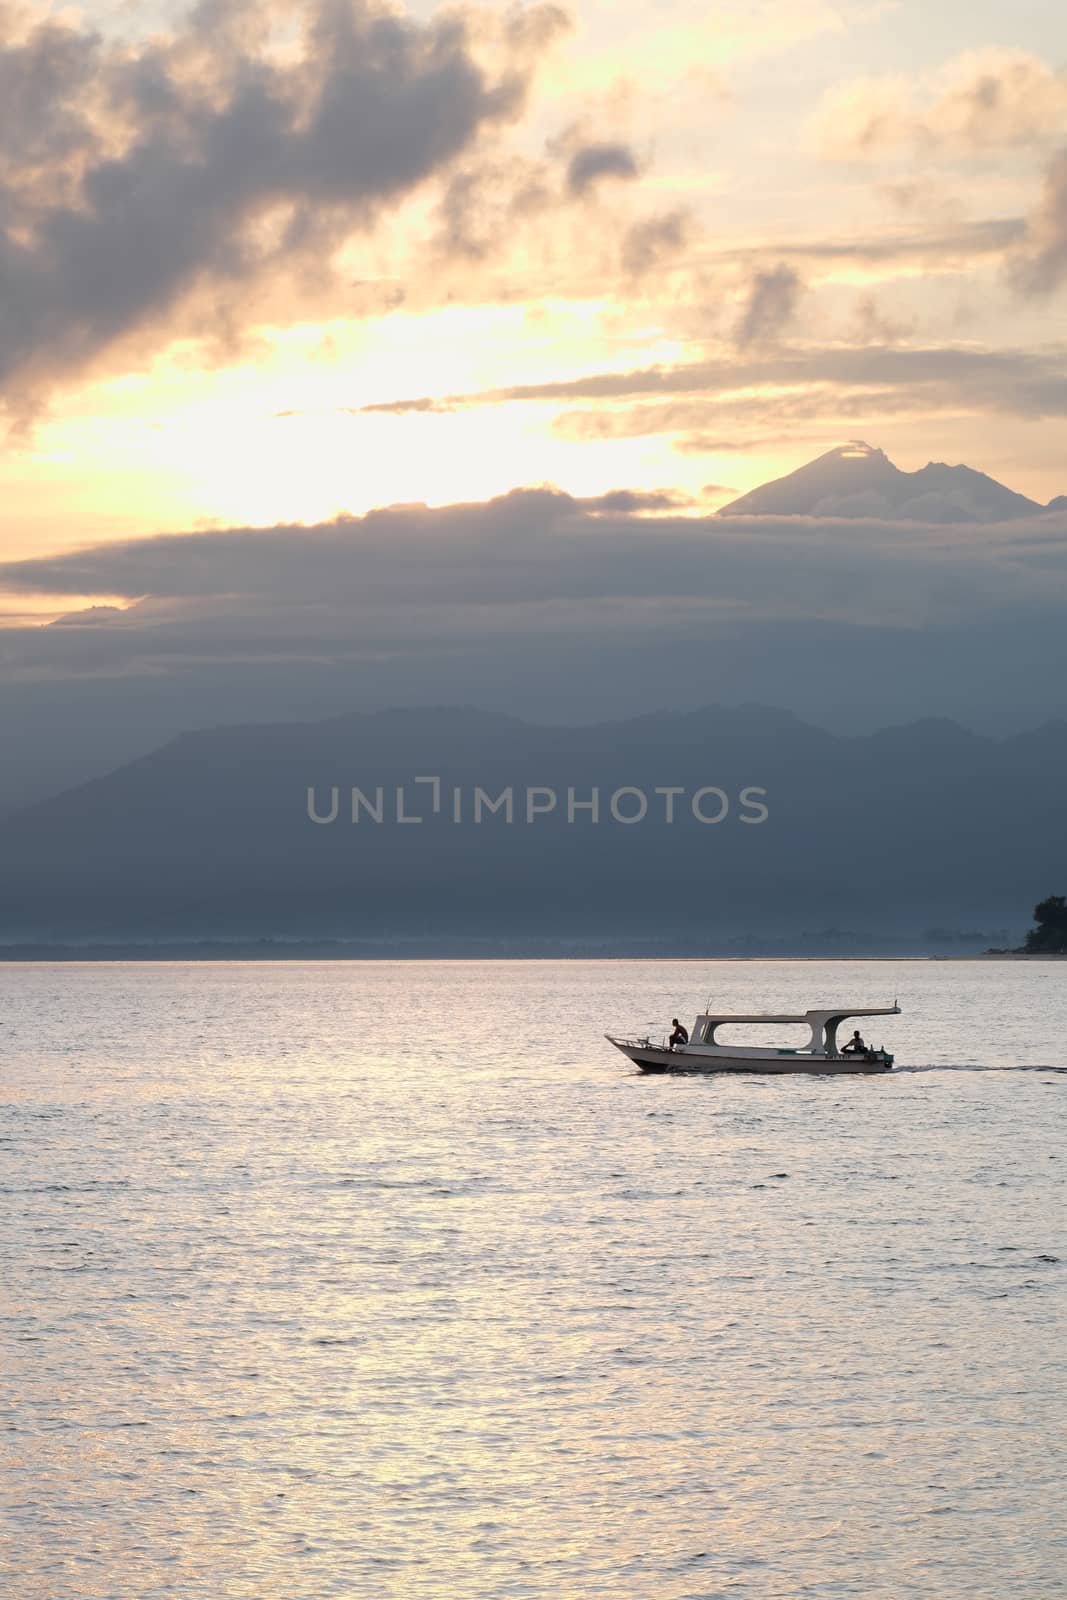 Indonesian fisherman in the boat early morning. Lombok volcano Rinjani in the background